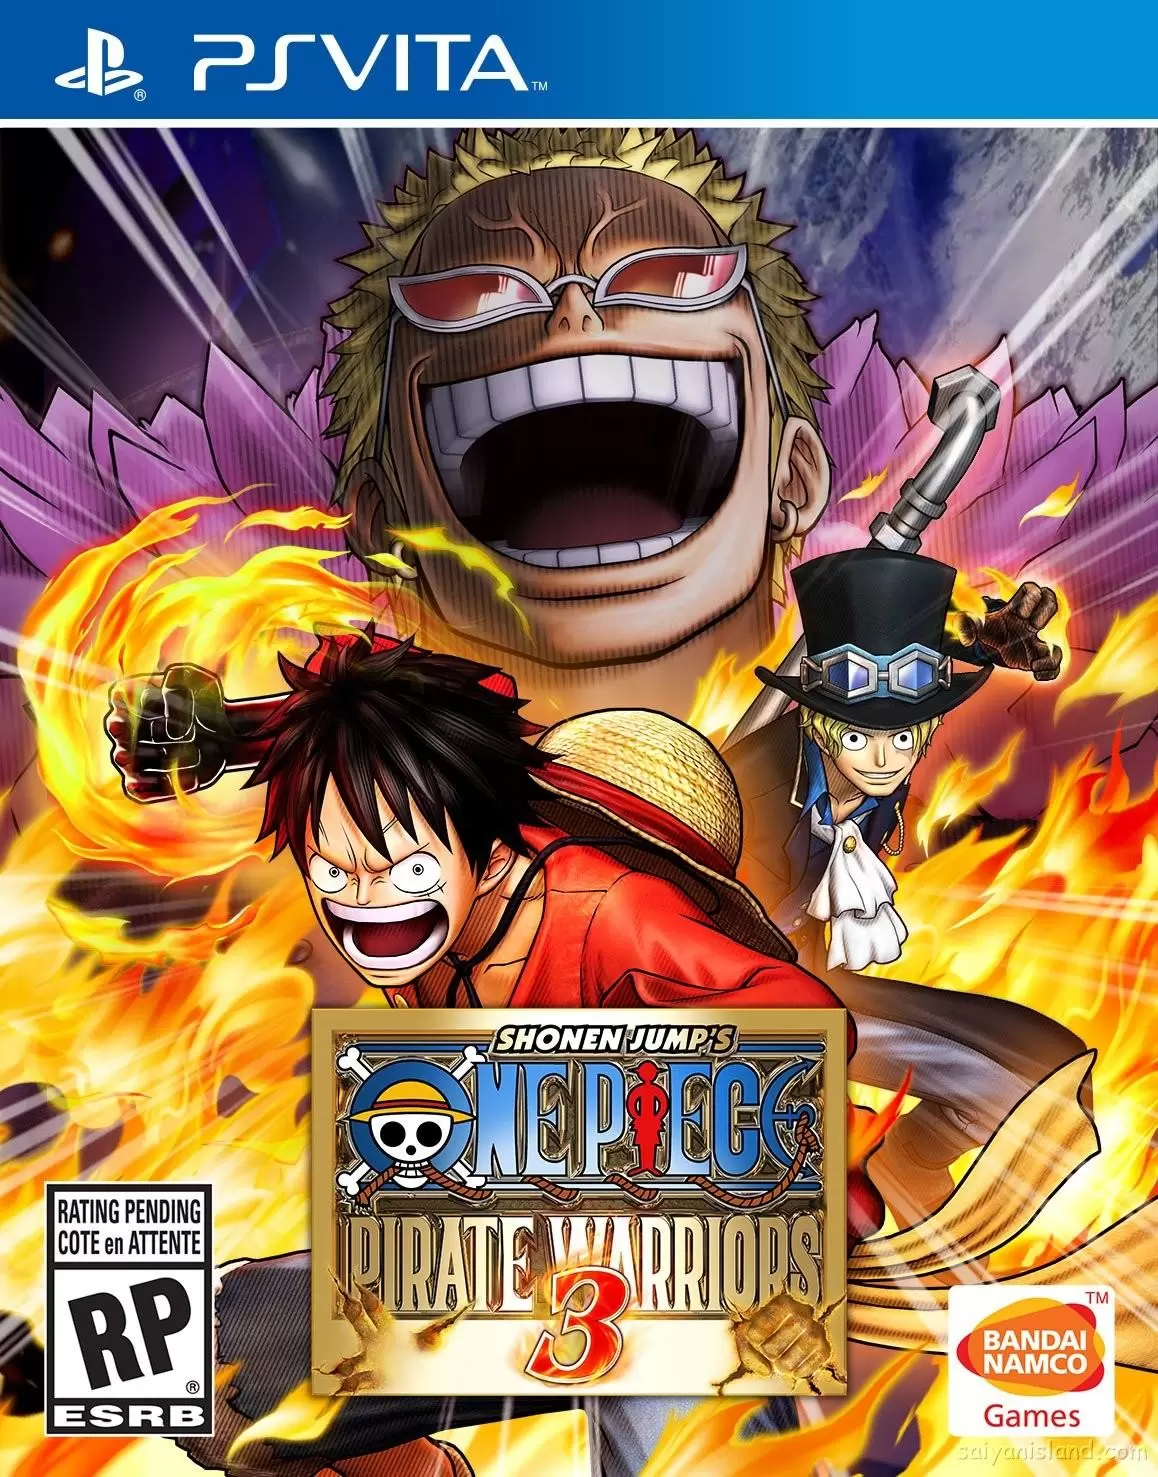 PS Vita Games - One Piece: Pirate Warriors 3